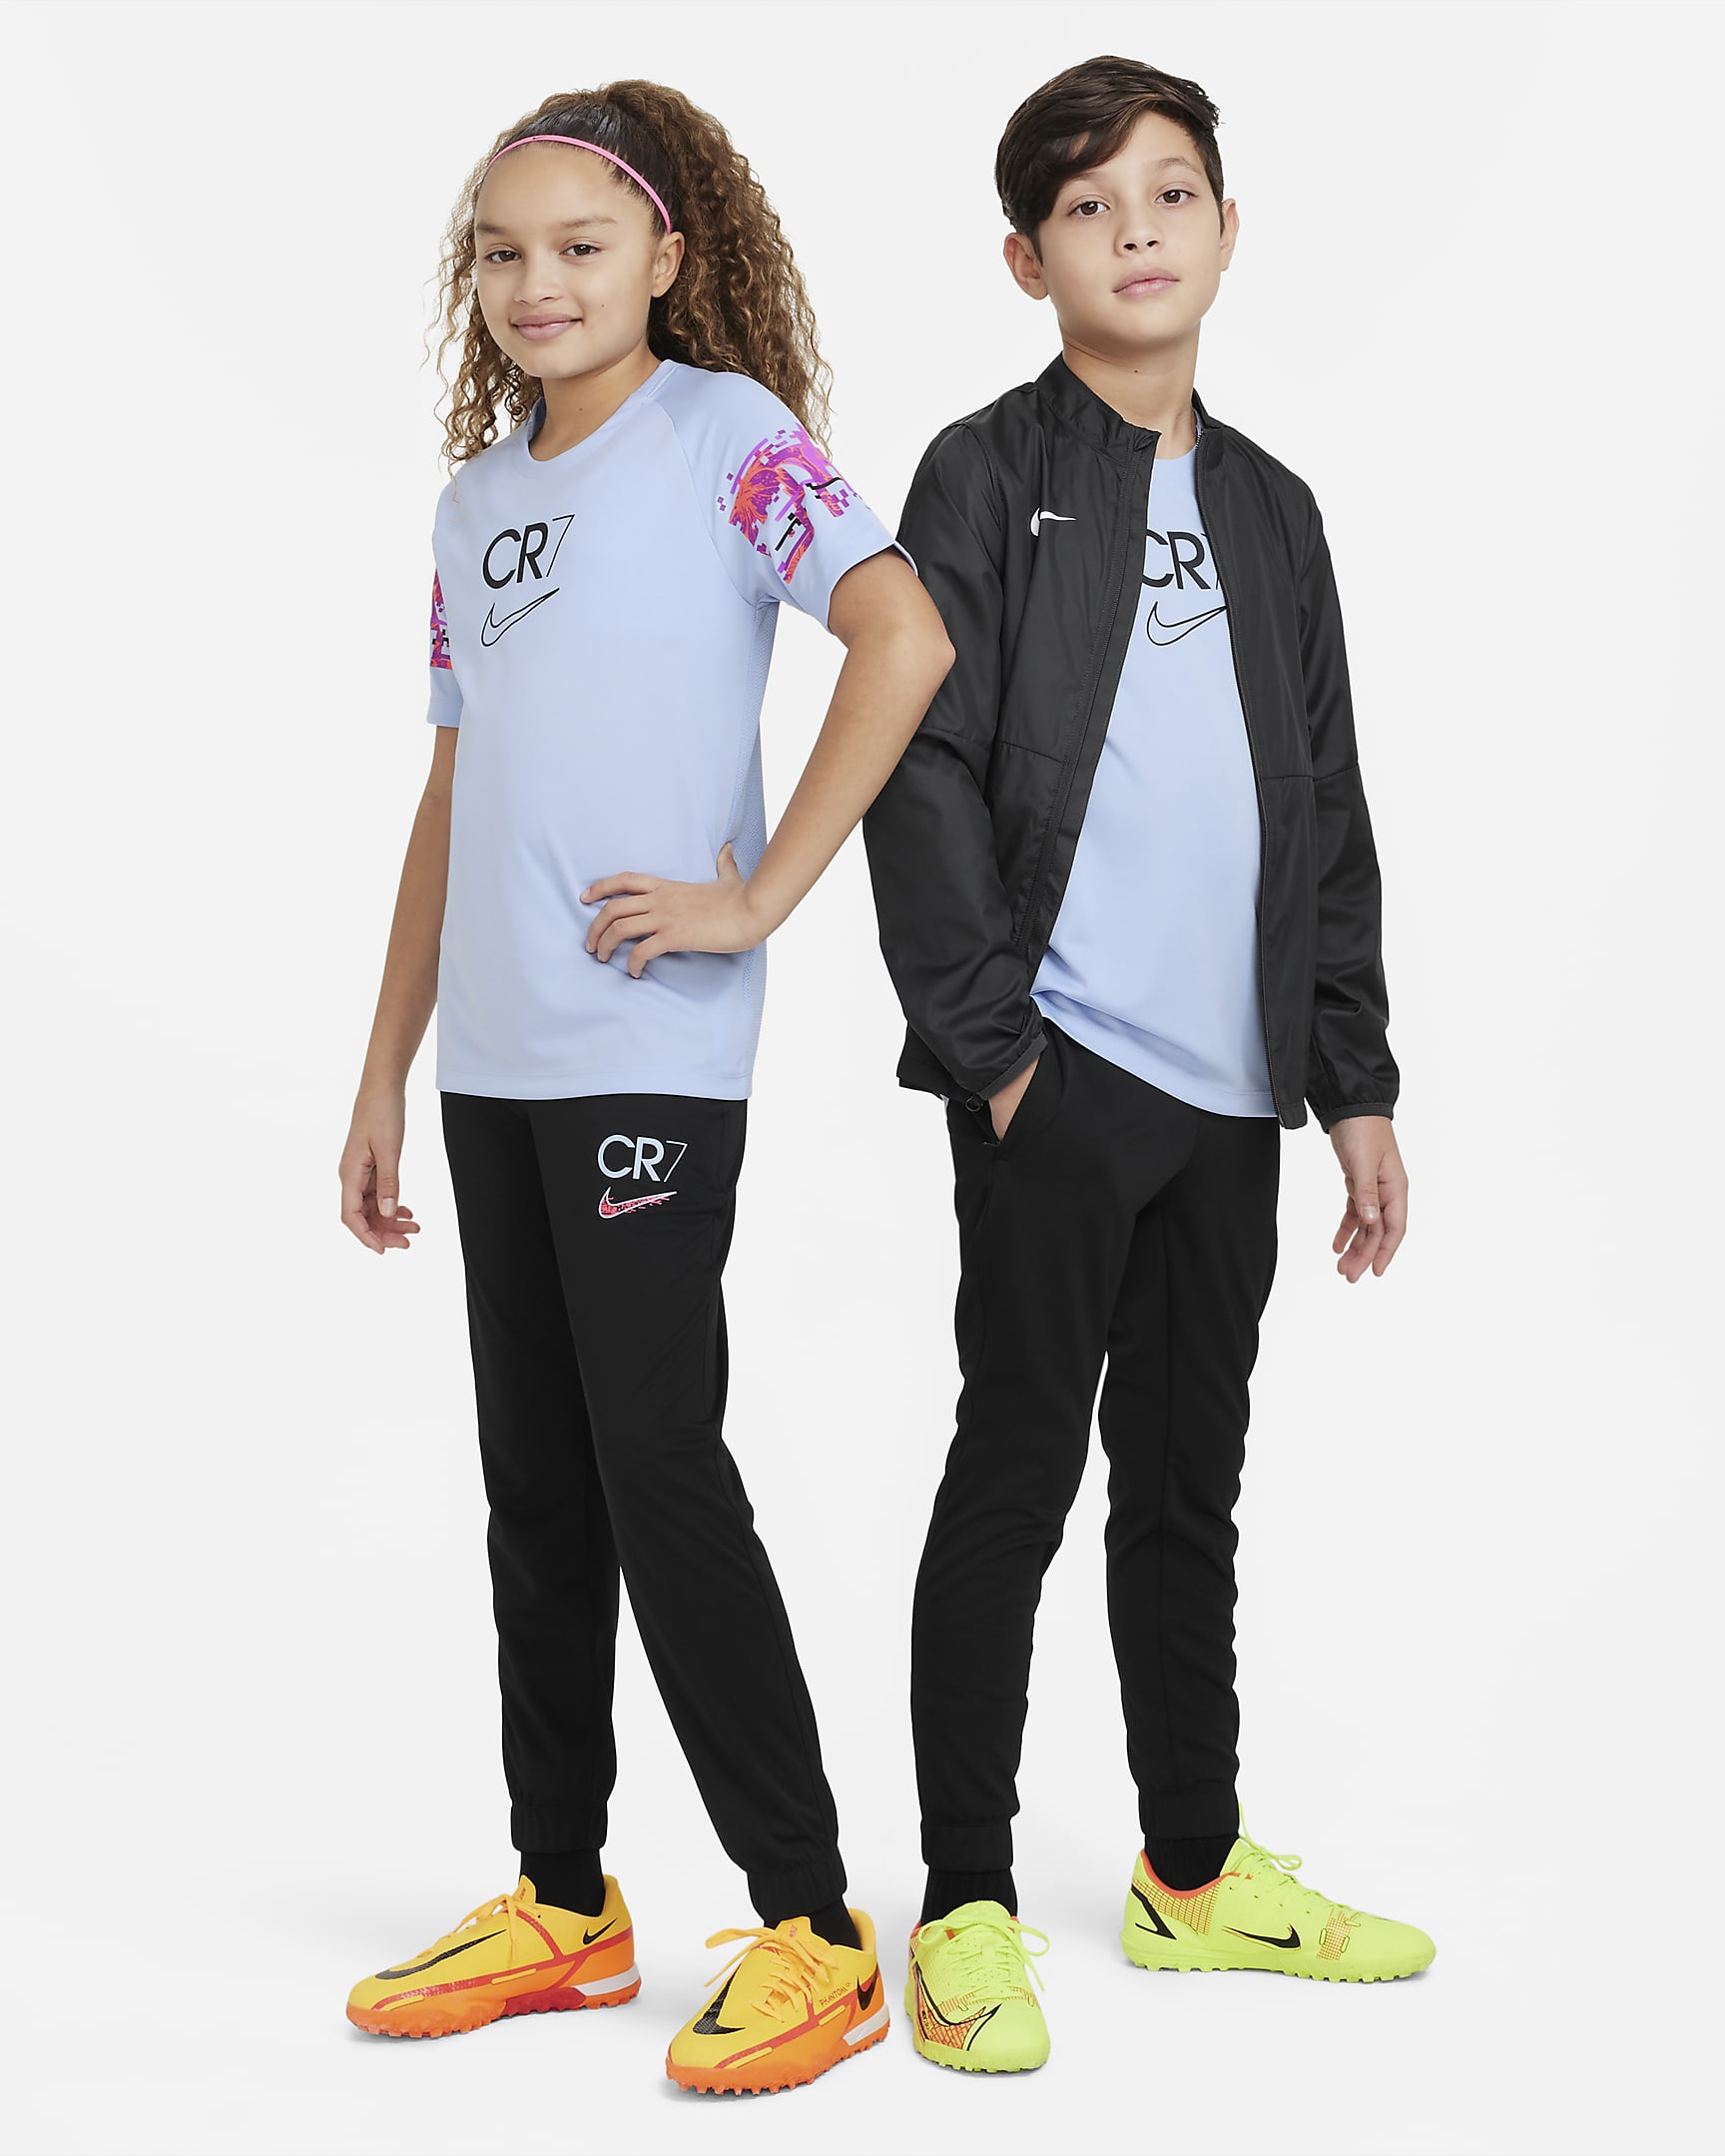 CR7 Big Kids' Short-Sleeve Soccer Top. Nike.com